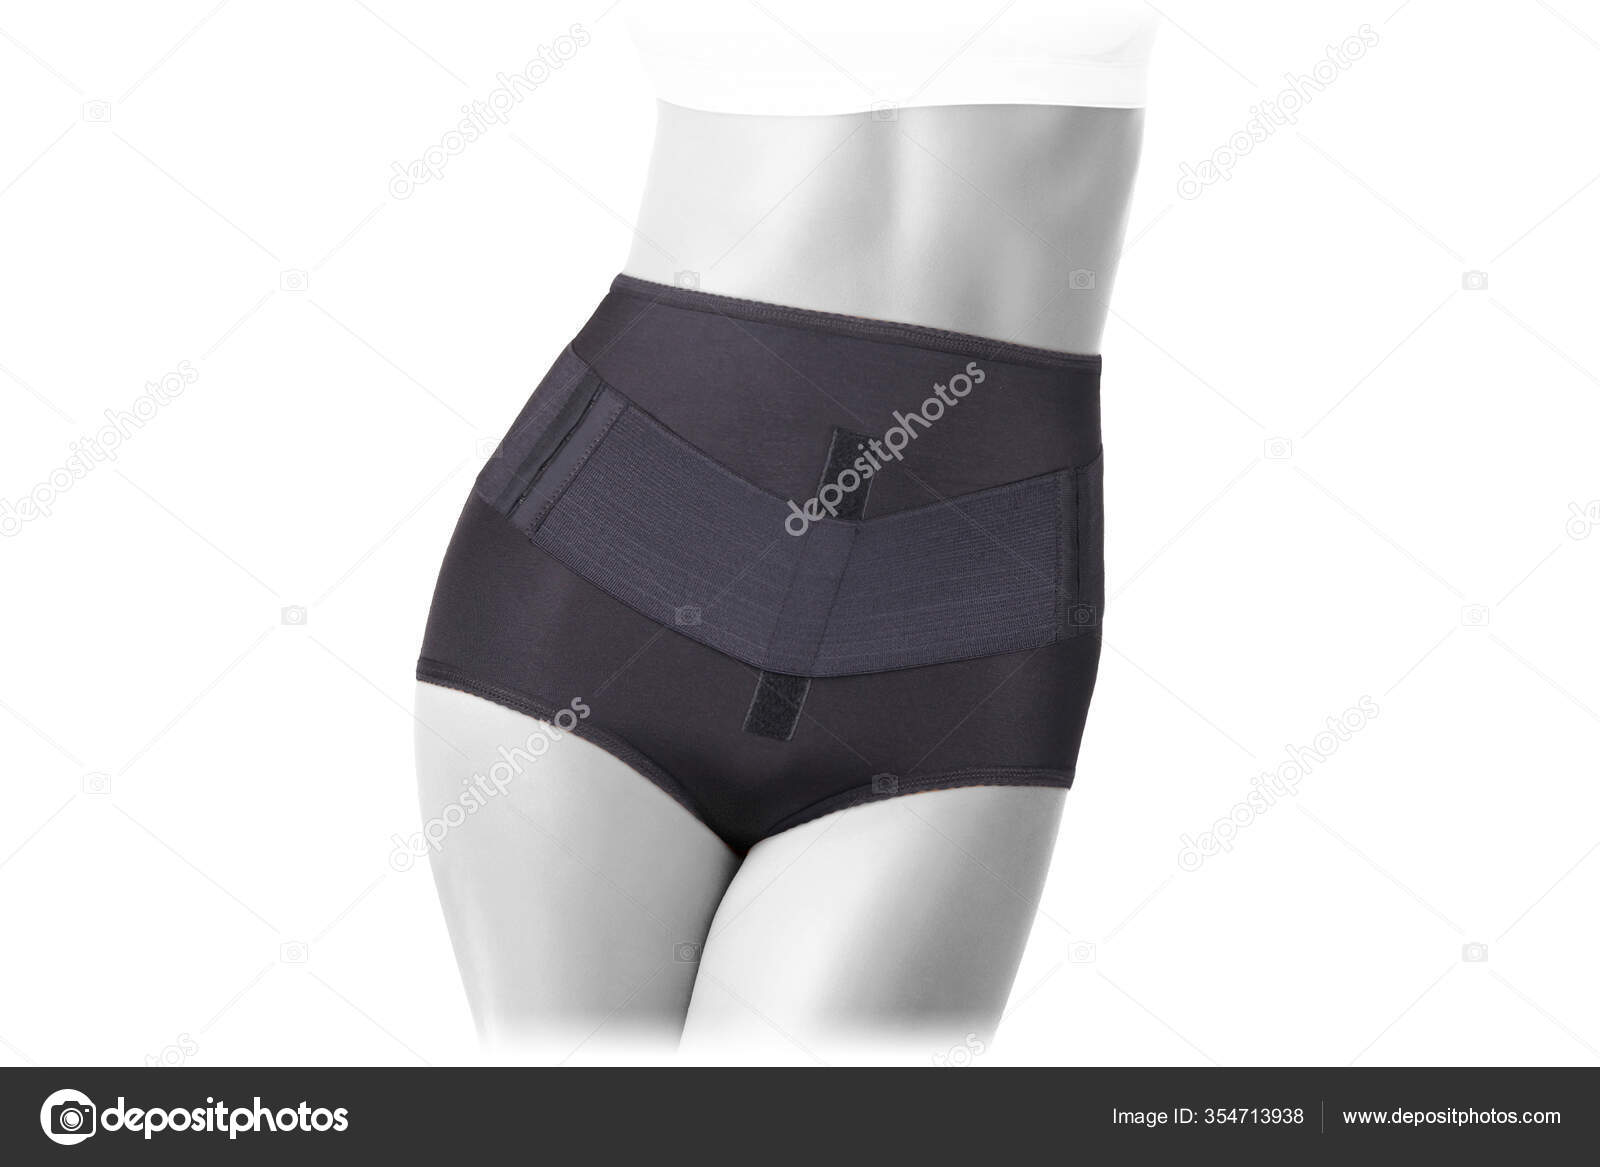 https://st3.depositphotos.com/33757592/35471/i/1600/depositphotos_354713938-stock-photo-postnatal-bandage-medical-compression-underwear.jpg